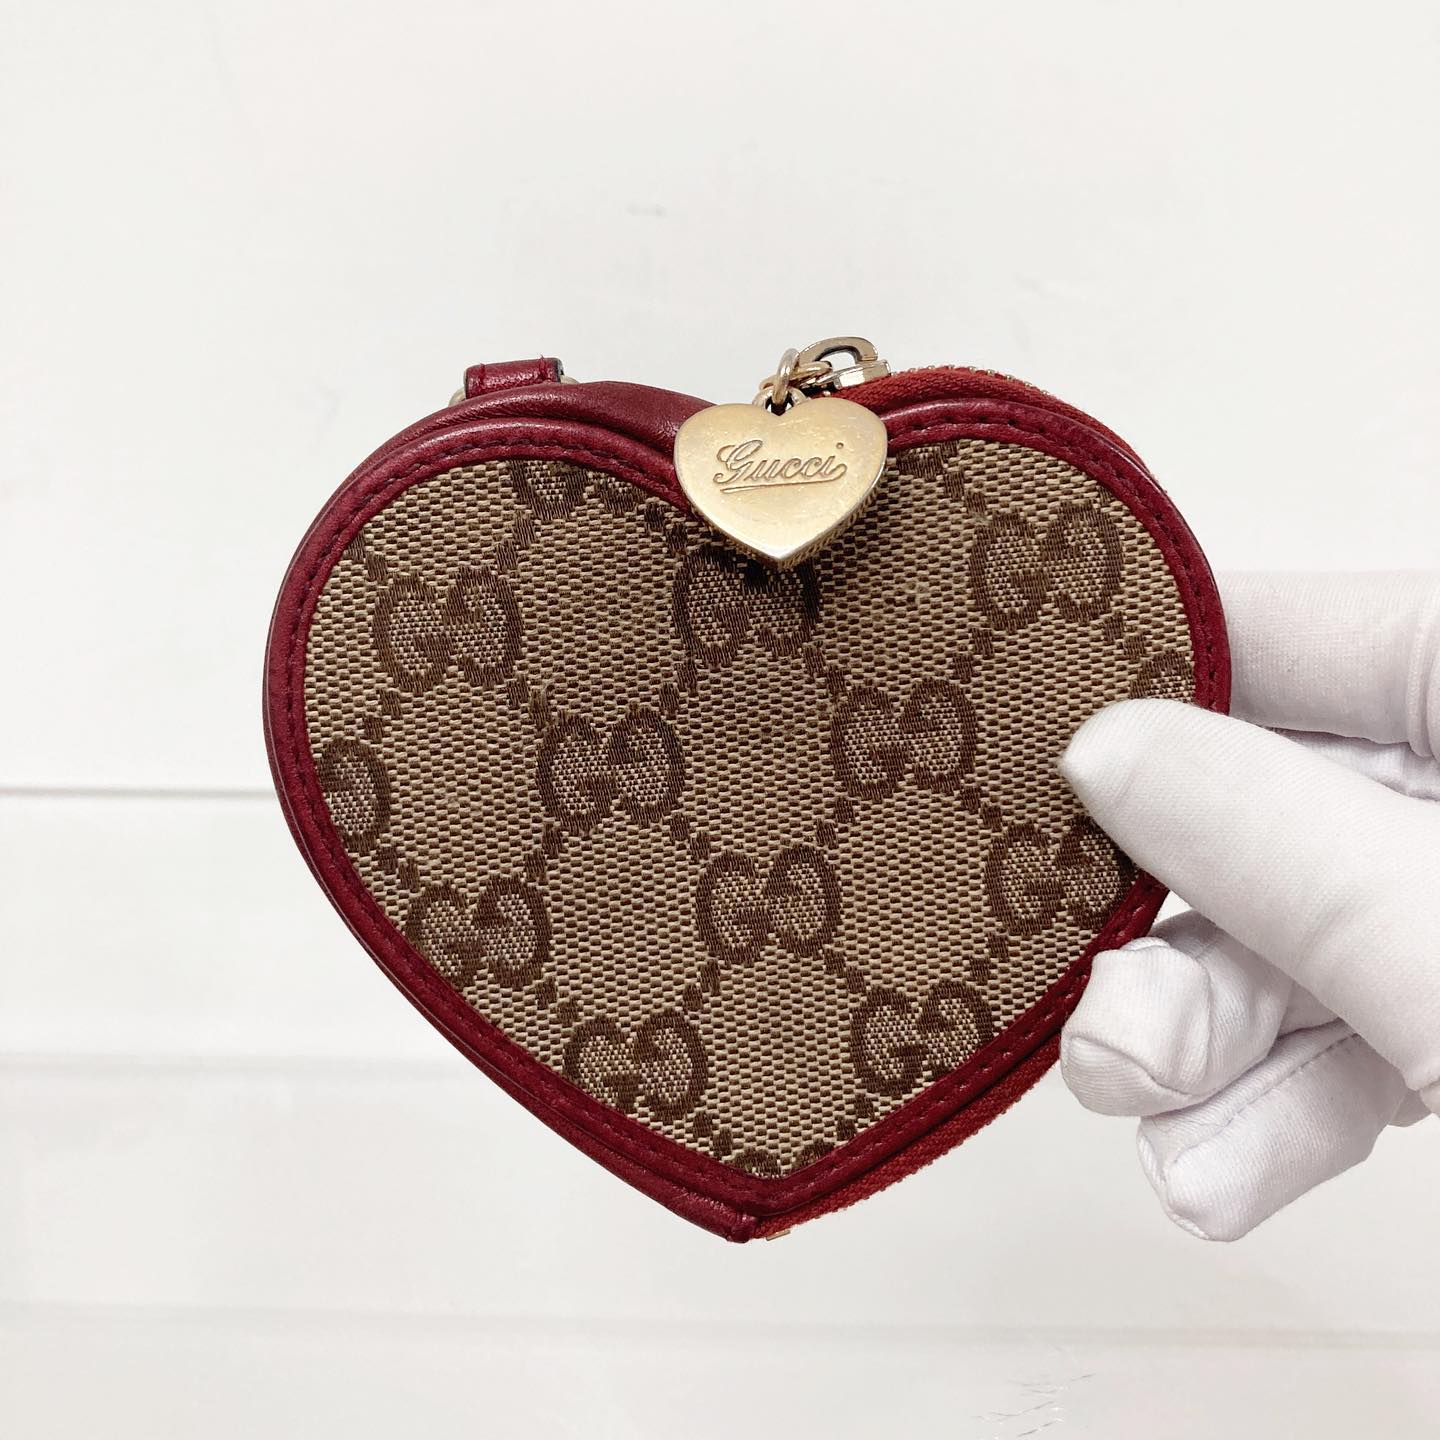 Gucci GG Heart Coin Bag 老花心心散紙包